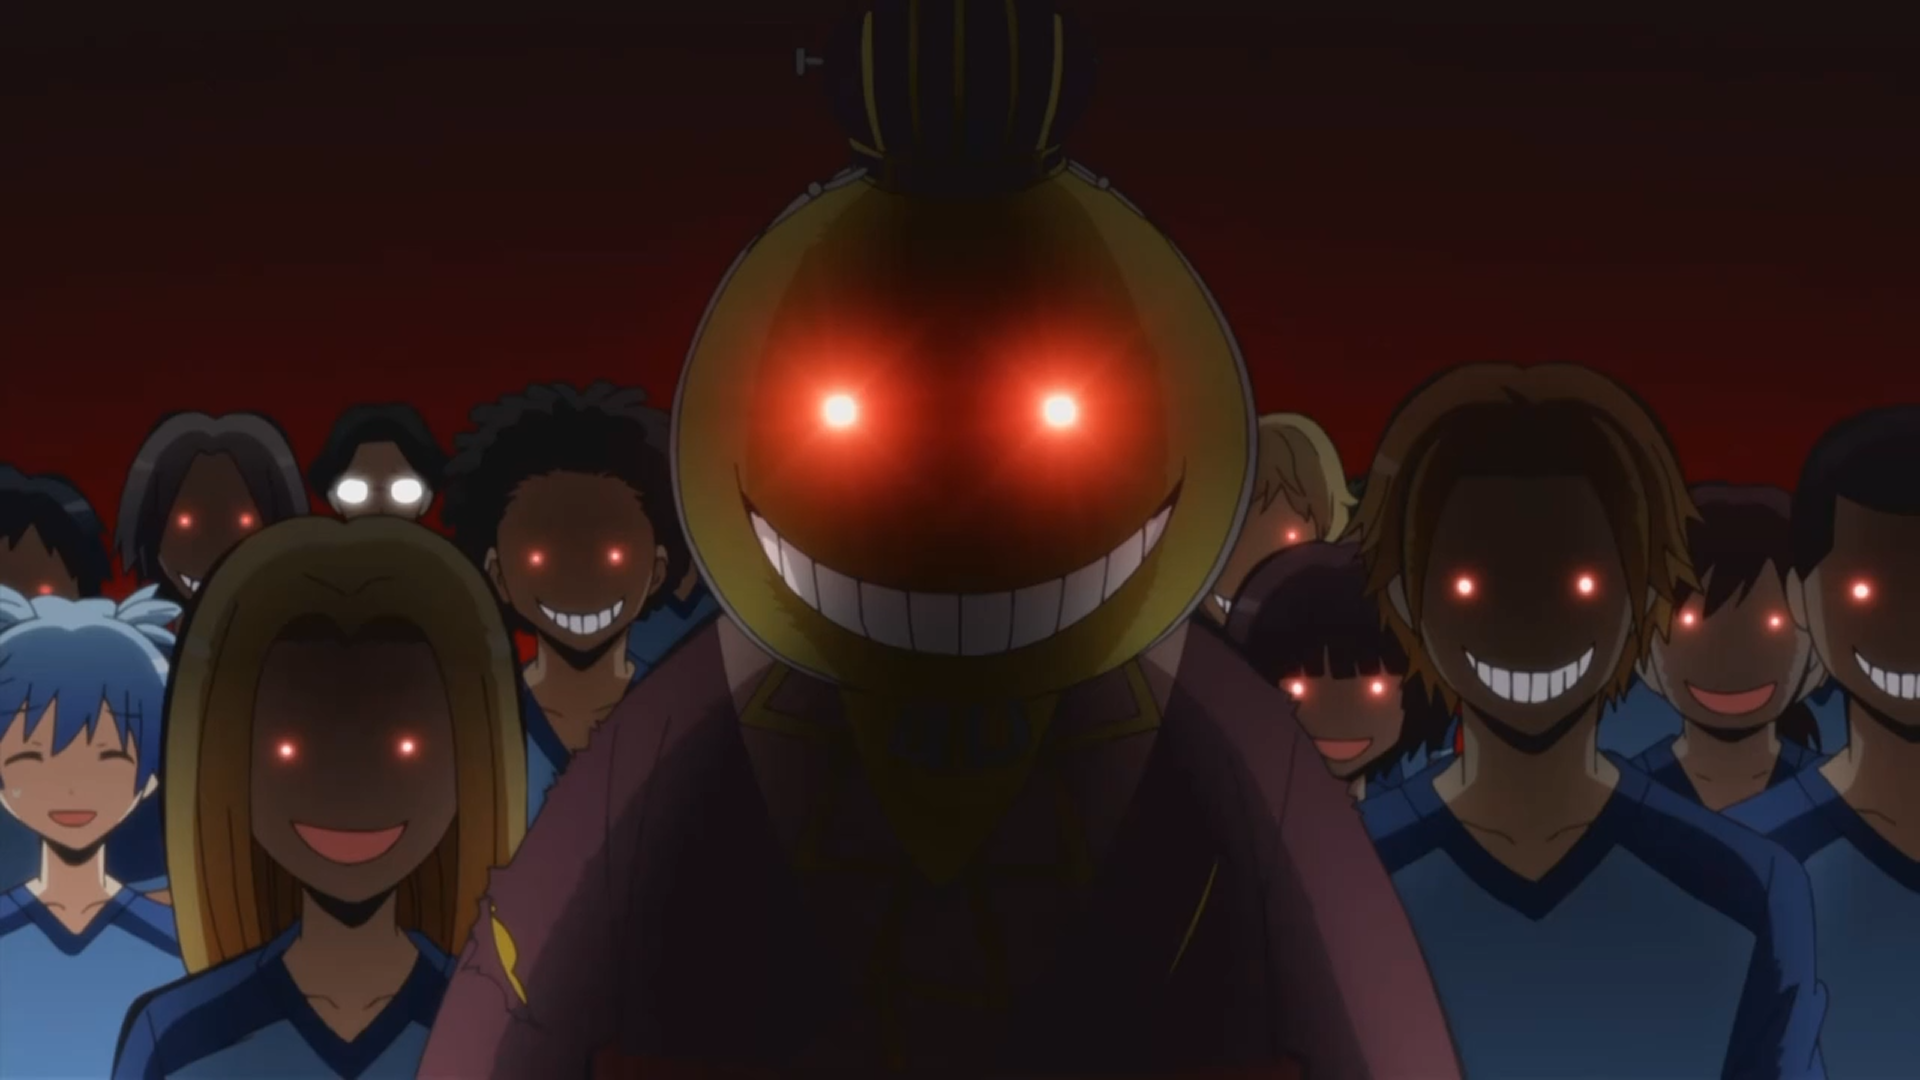 Anime 1920x1080 Ansatsu Kyoushitsu evil Koro-sensei anime smiling spooky red eyes glowing eyes anime boys anime girls